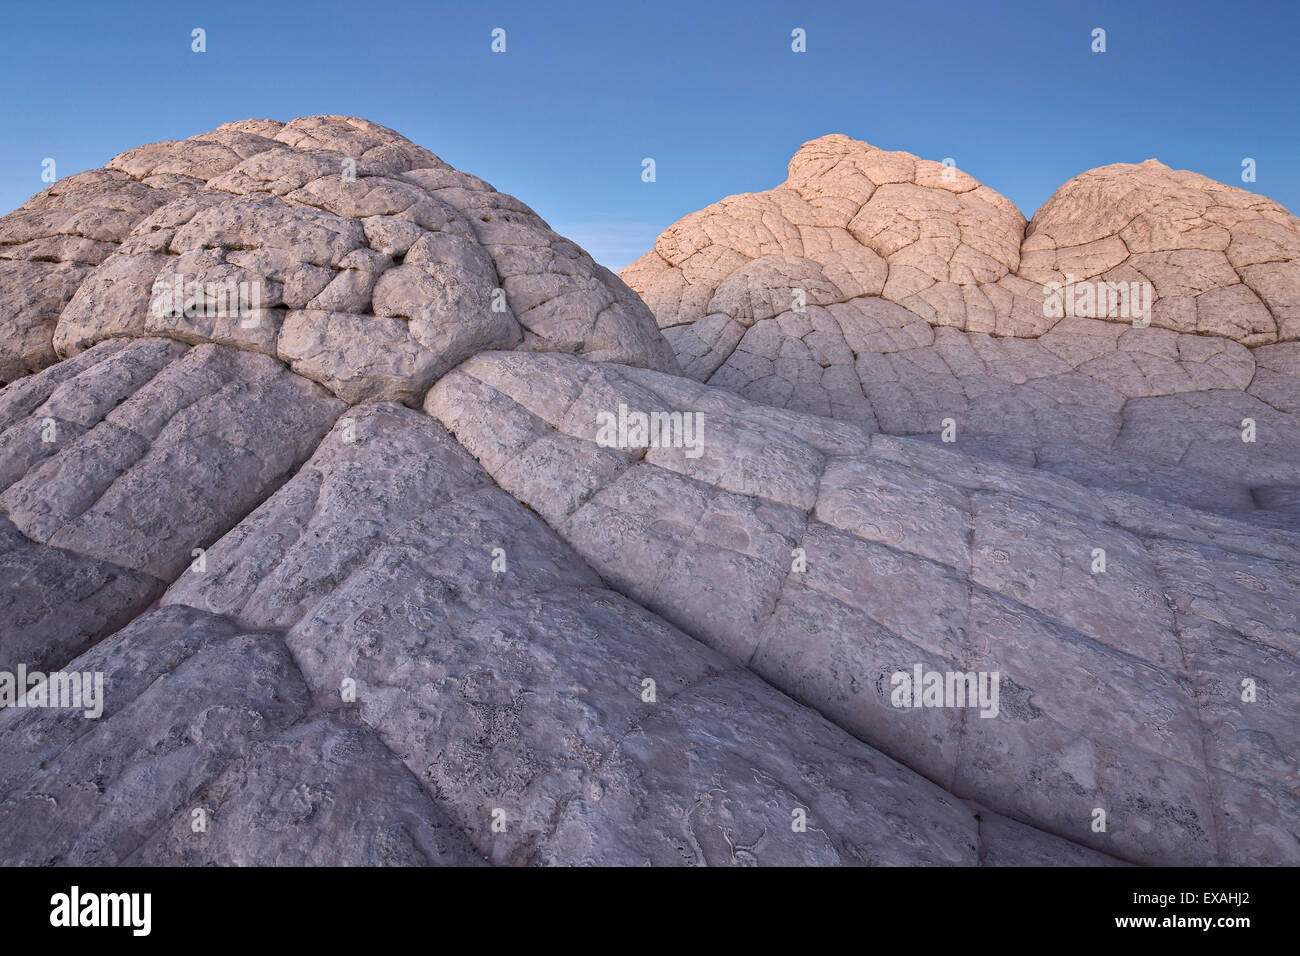 Brain Rock at dusk, White Pocket, Vermilion Cliffs National Monument, Arizona, United States of America, North America Stock Photo